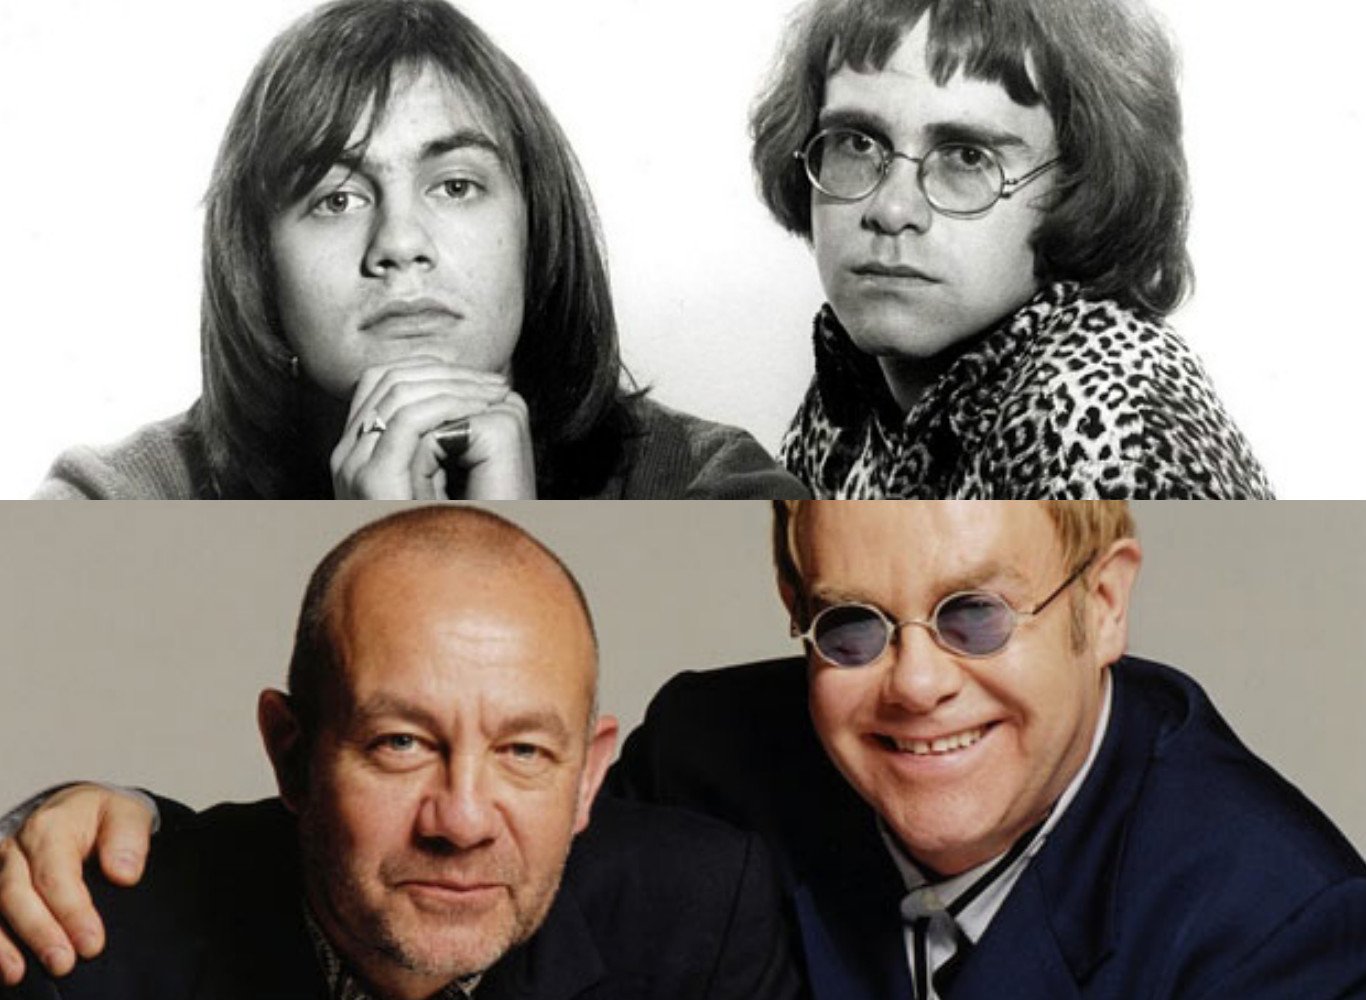 Happy 68th birthday Bernie Taupin! Still pretty sure you and Elton are twins. 